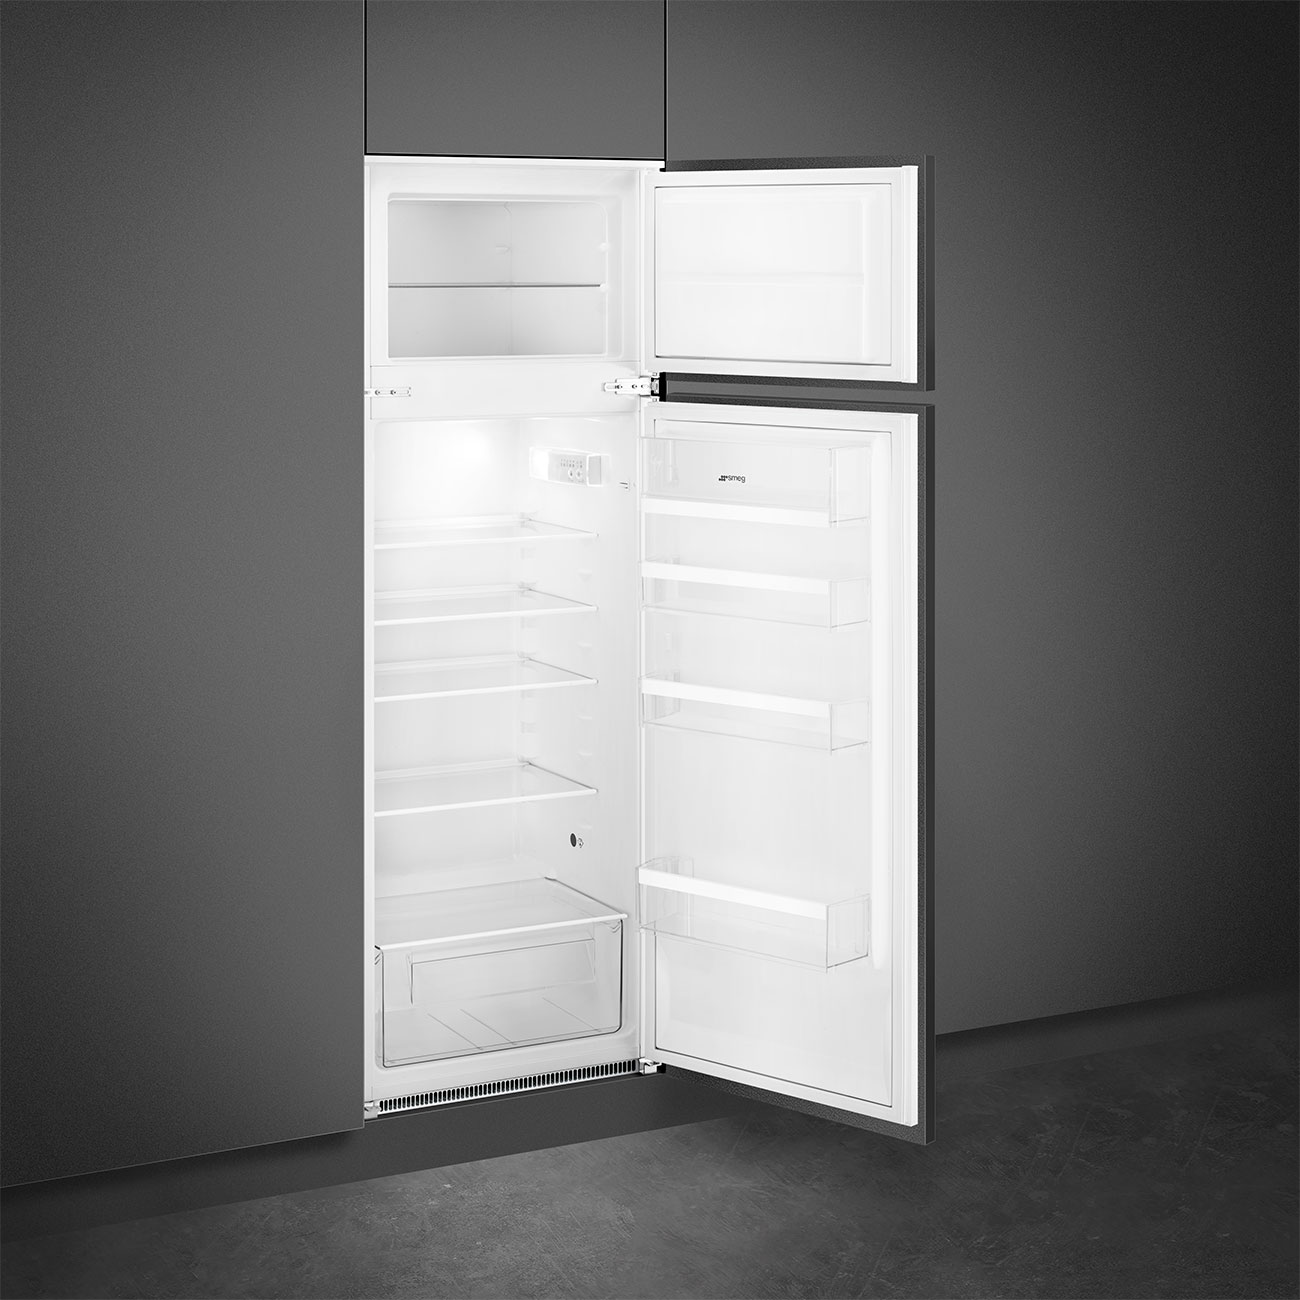 Top Mount Built-in refrigerator - Smeg_2